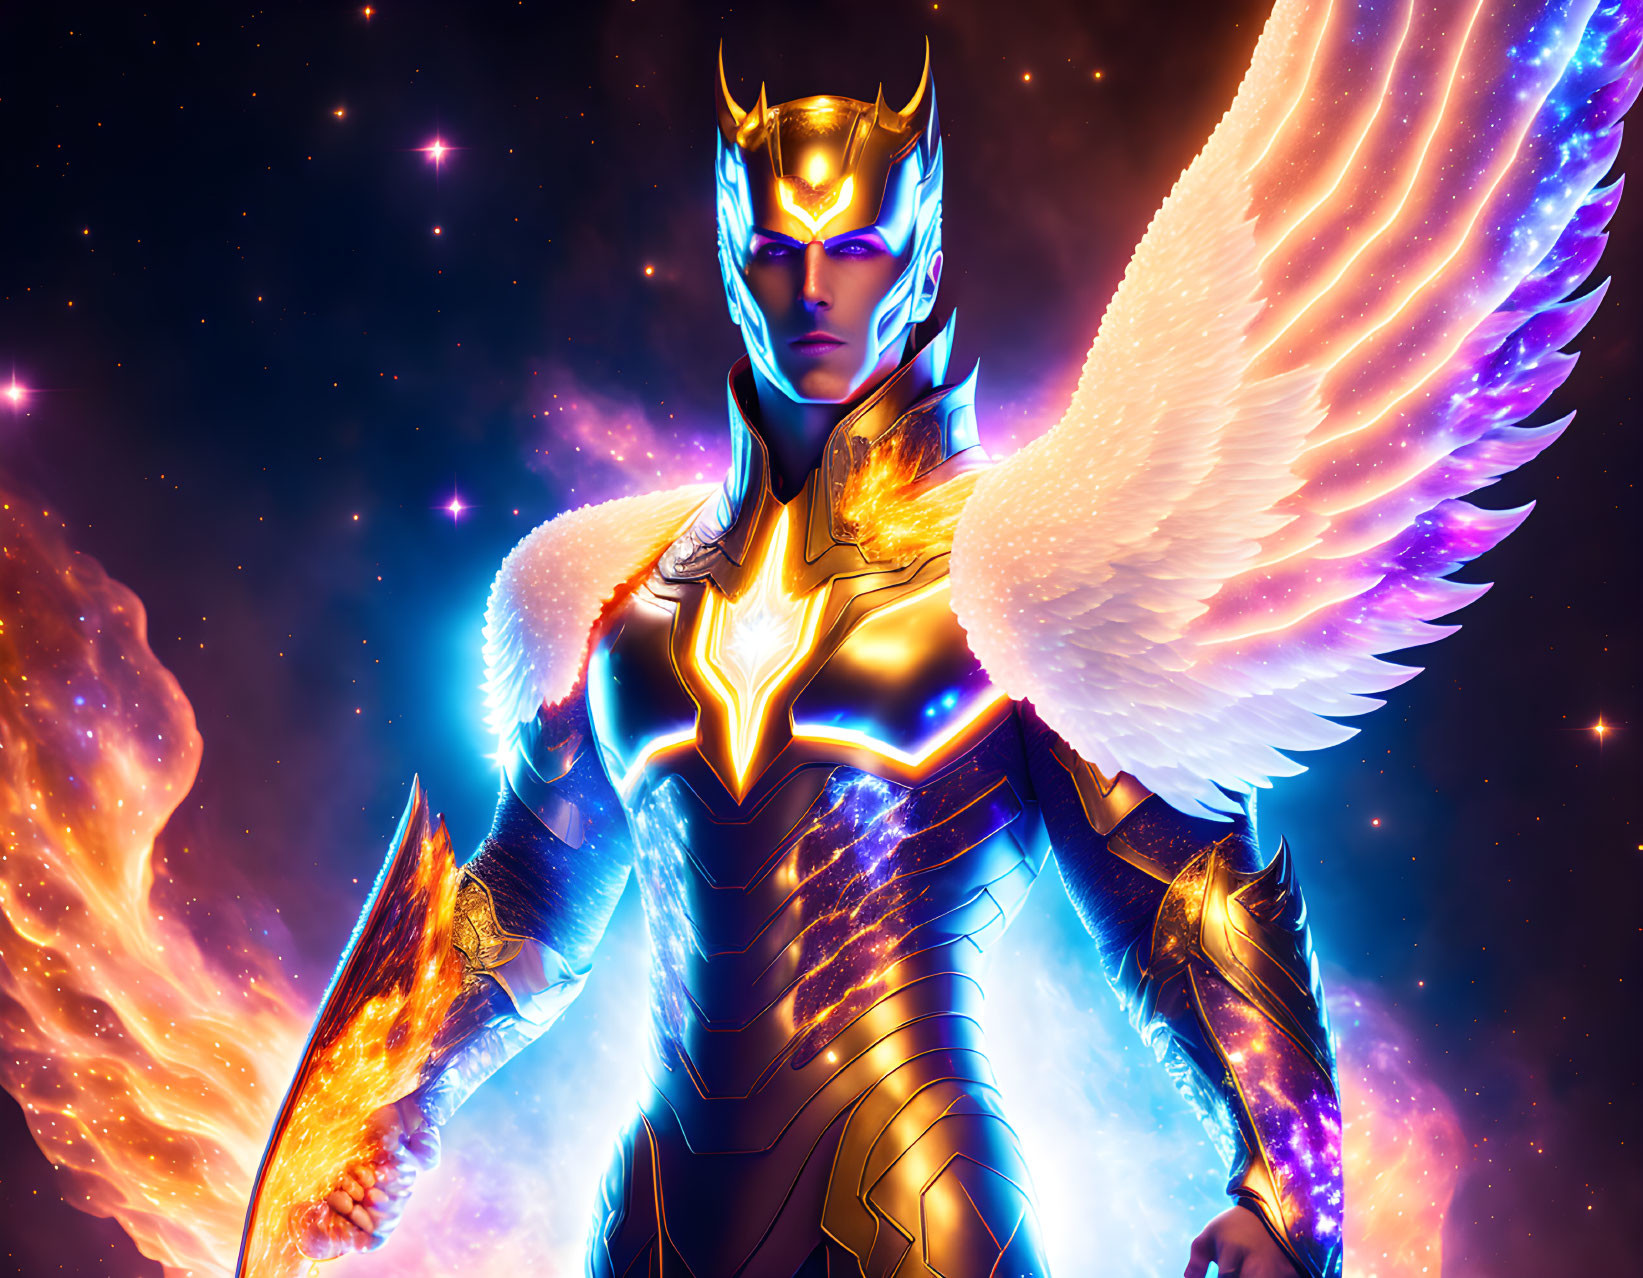 Sephiroth: One Winged Angel Redeemed